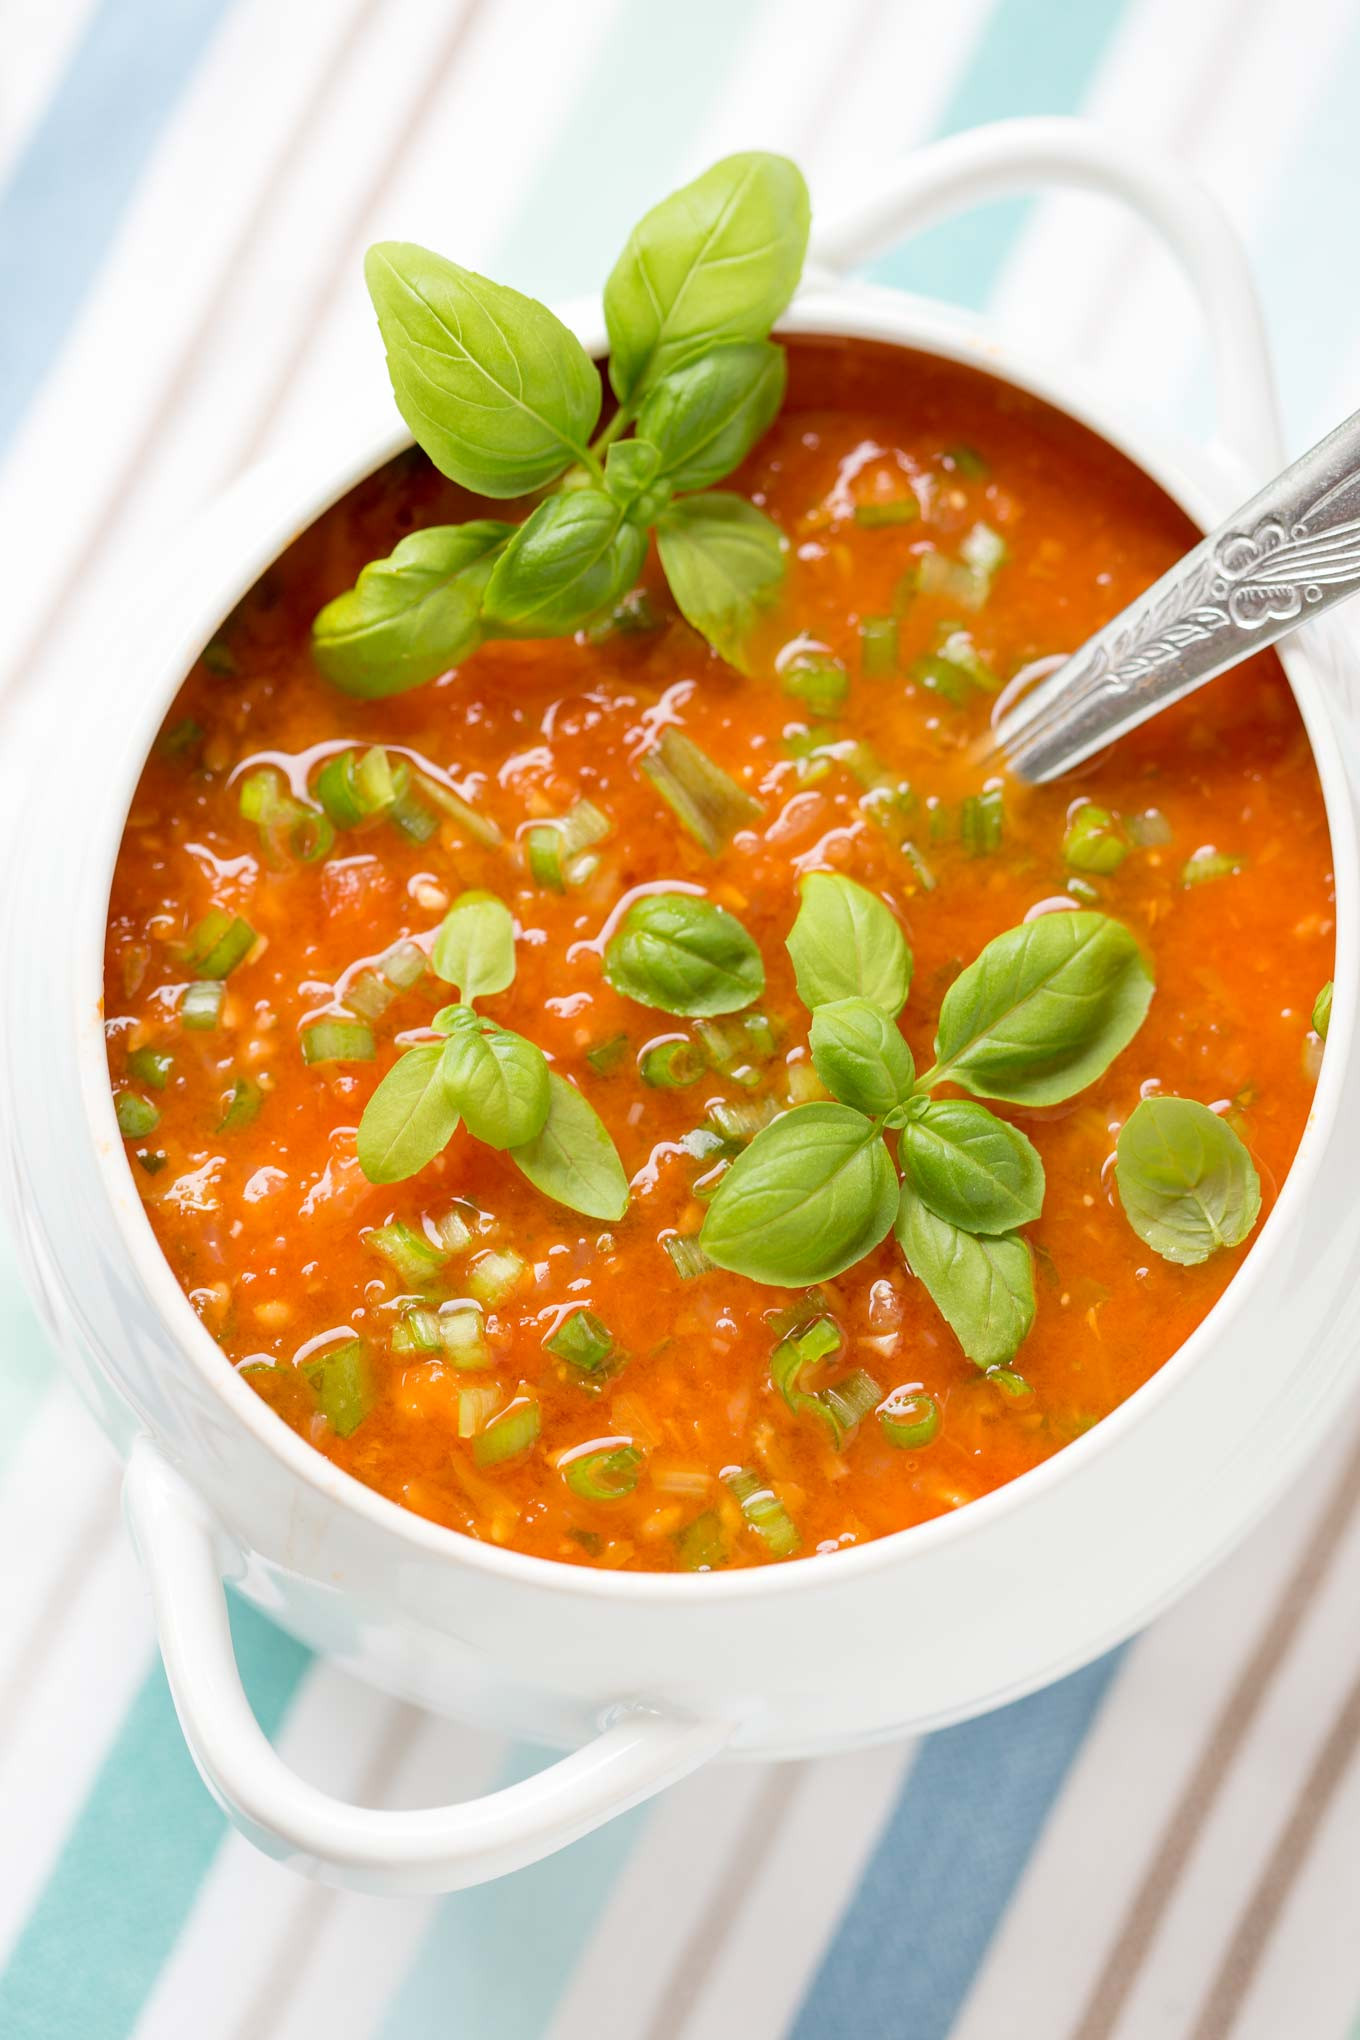 Fresh Tomato Soup Recipe
 30 min FRESH TOMATO SOUP RECIPE